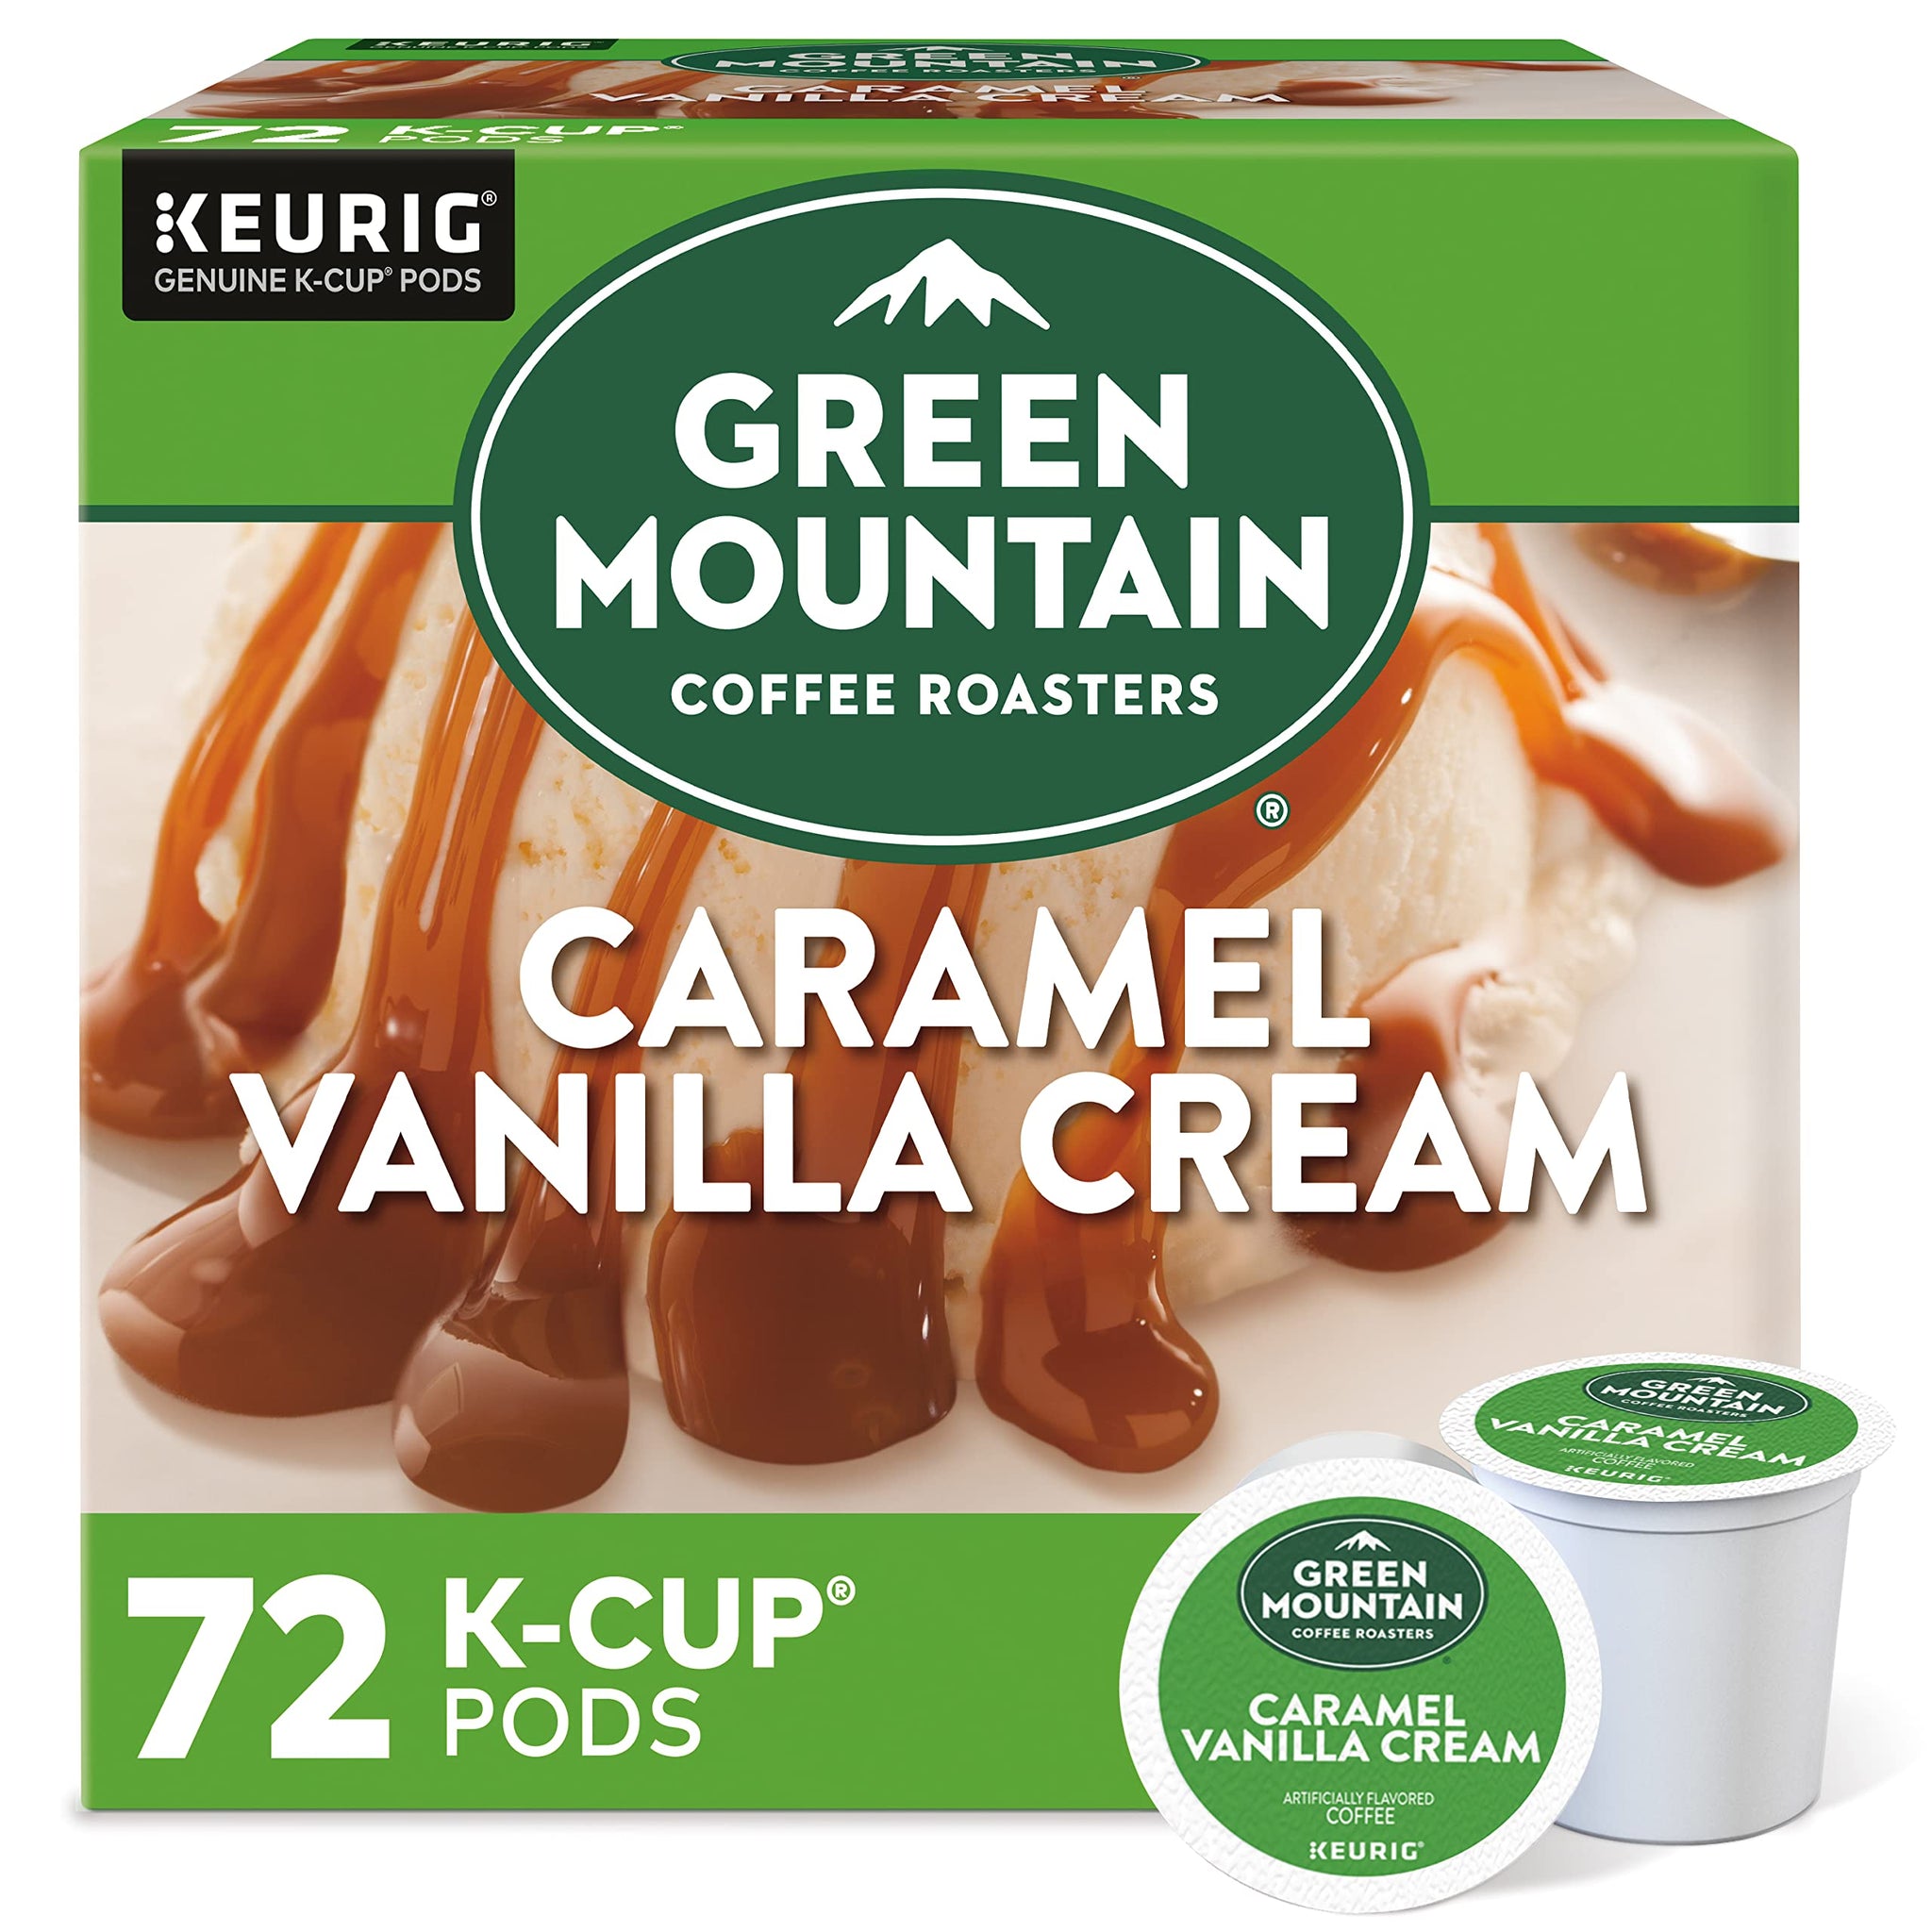 Green Mountain Coffee Roasters Caramel Vanilla Cream Keurig Single-Serve K-Cup pods, Light Roast Coffee, 72 Count (6 Packs of 12)